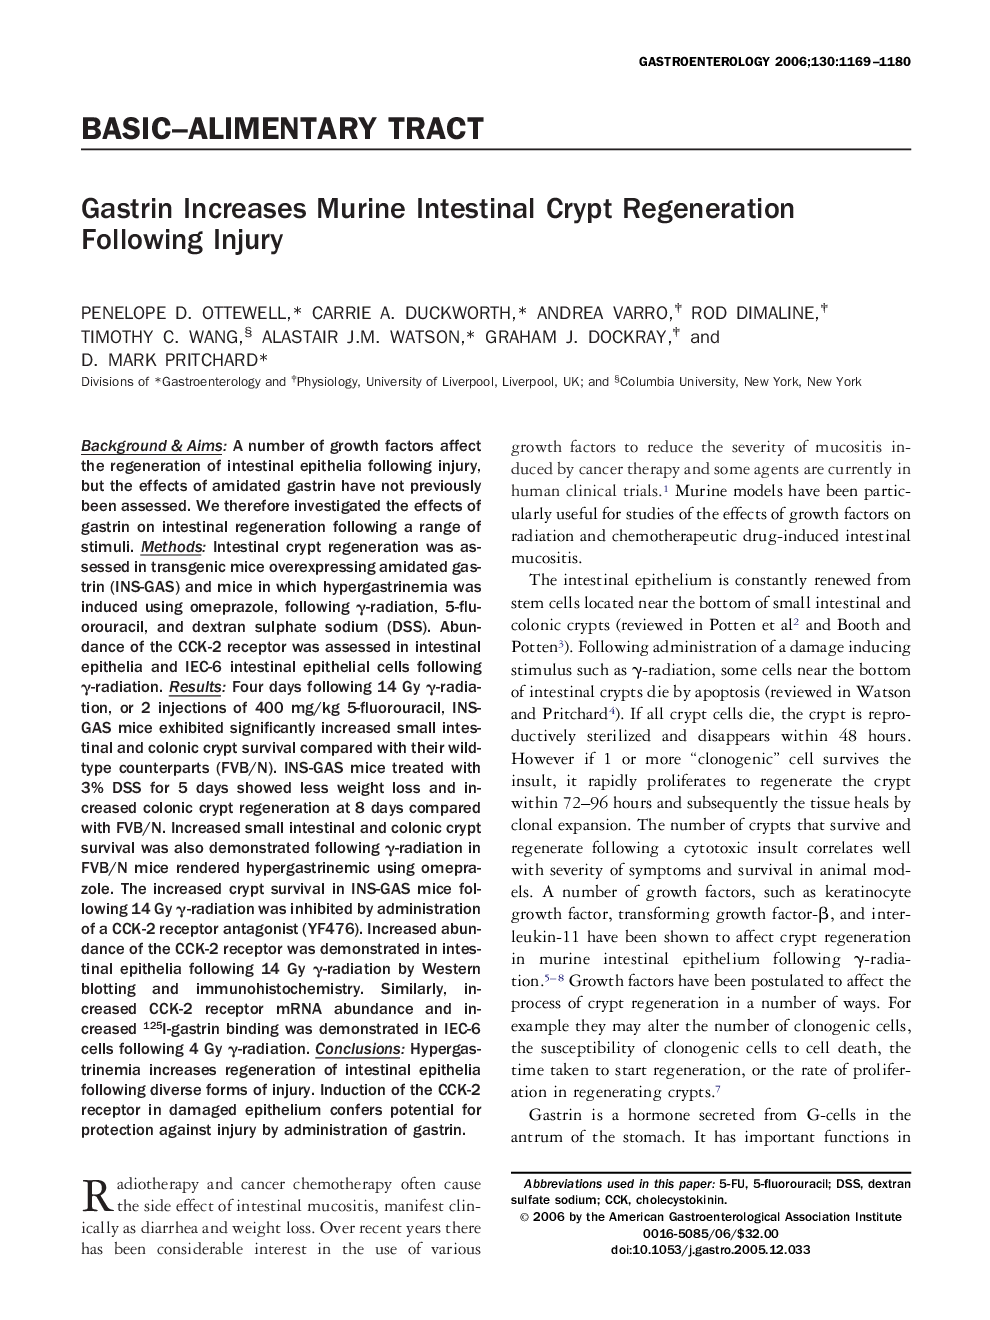 Gastrin Increases Murine Intestinal Crypt Regeneration Following Injury 